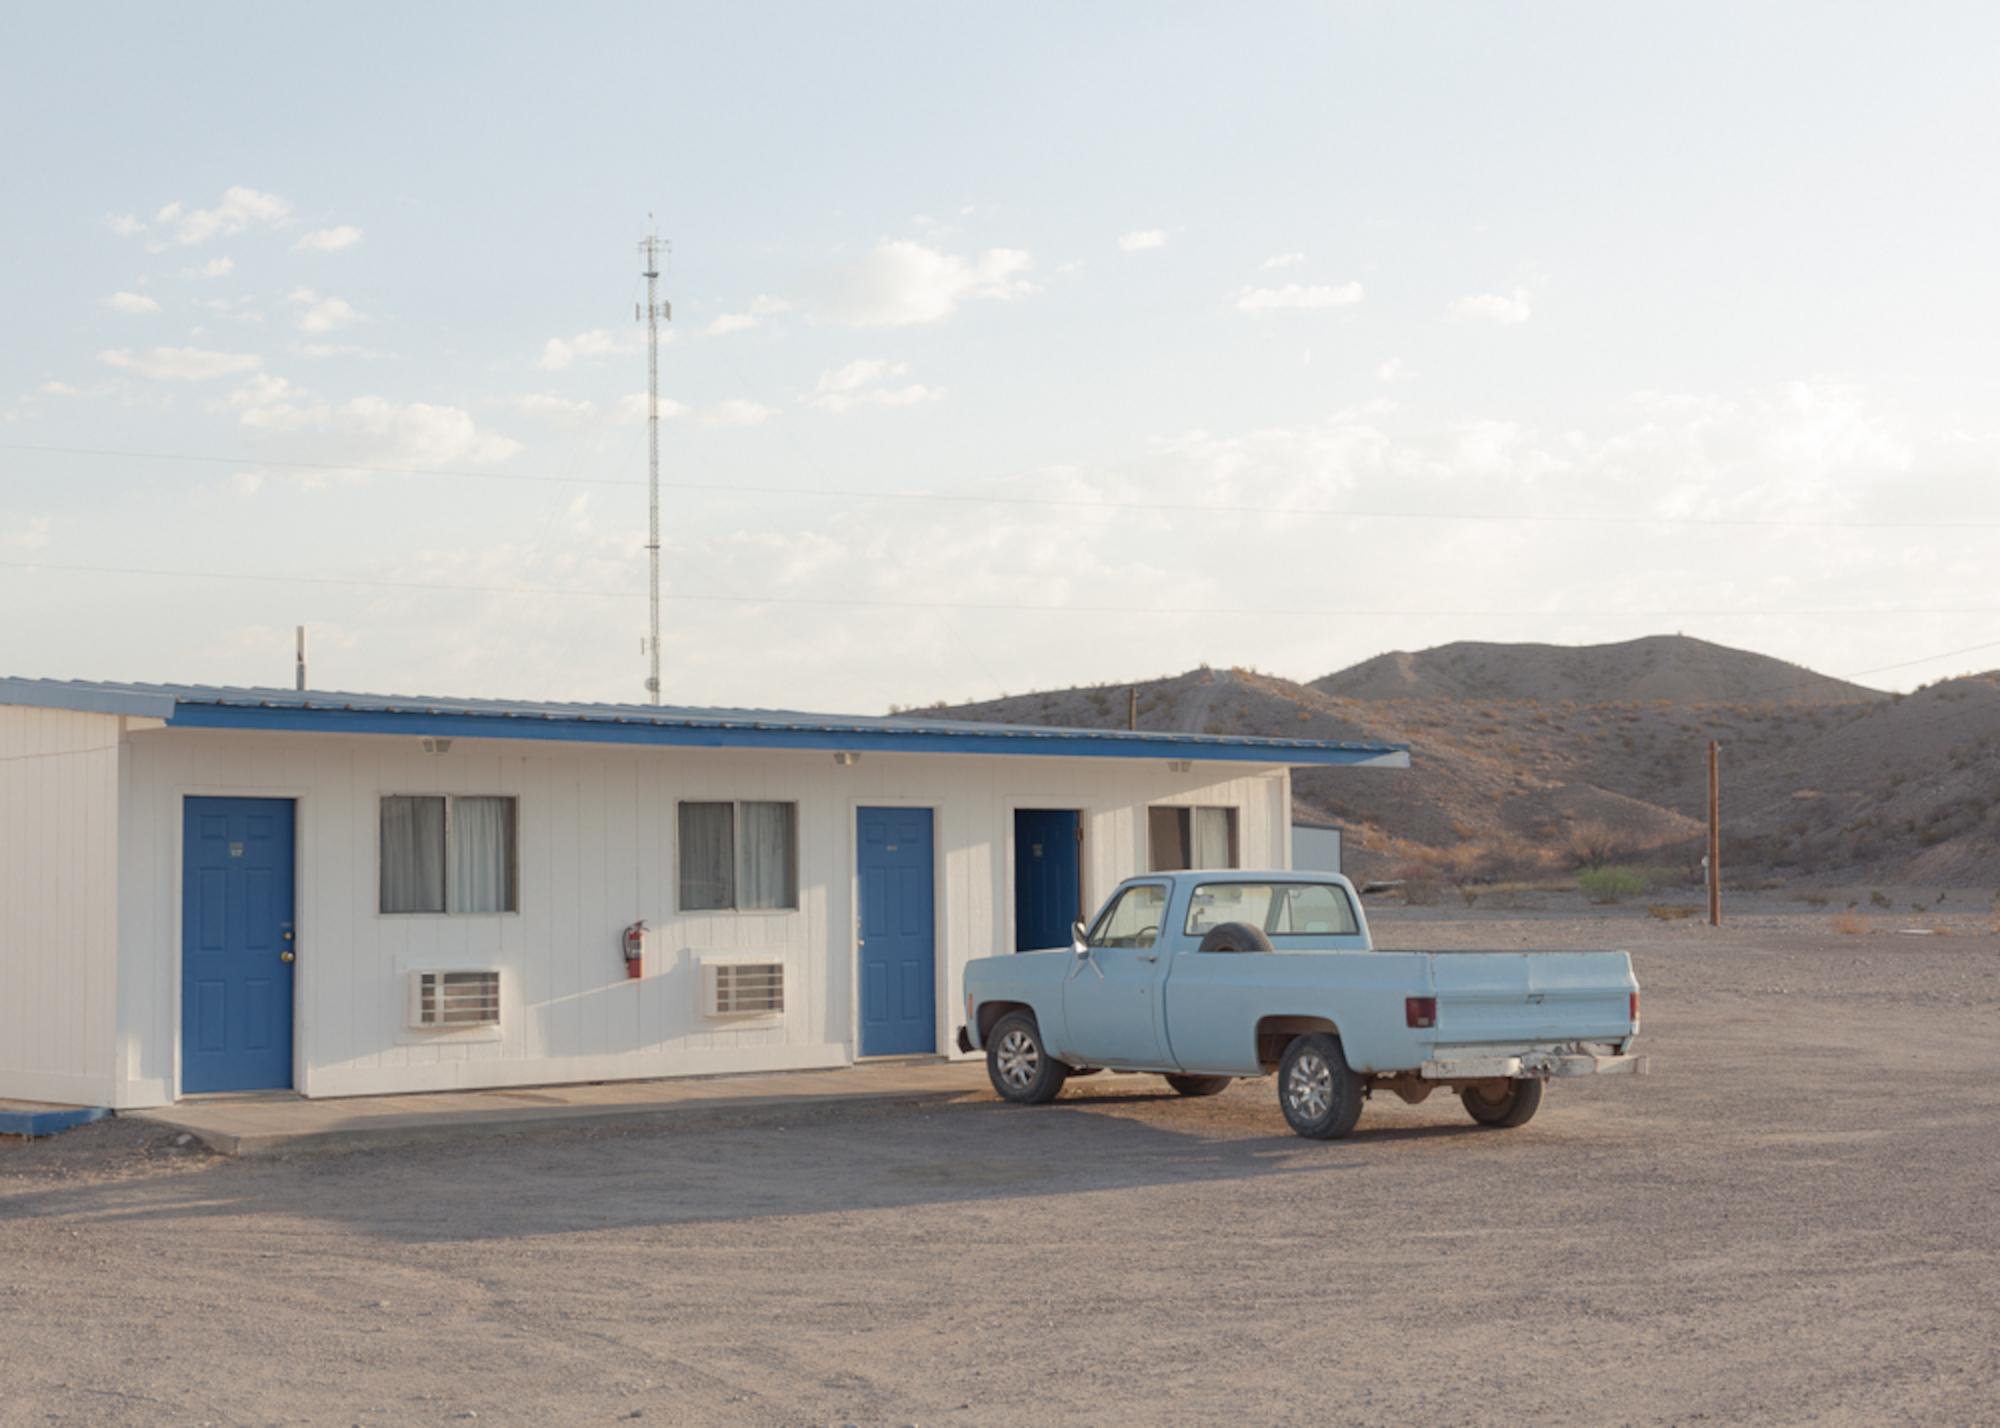 Jason Reed Color Photograph – Motel Parking Lot – amerikanische Landschaftsfotografie des 21. Jahrhunderts